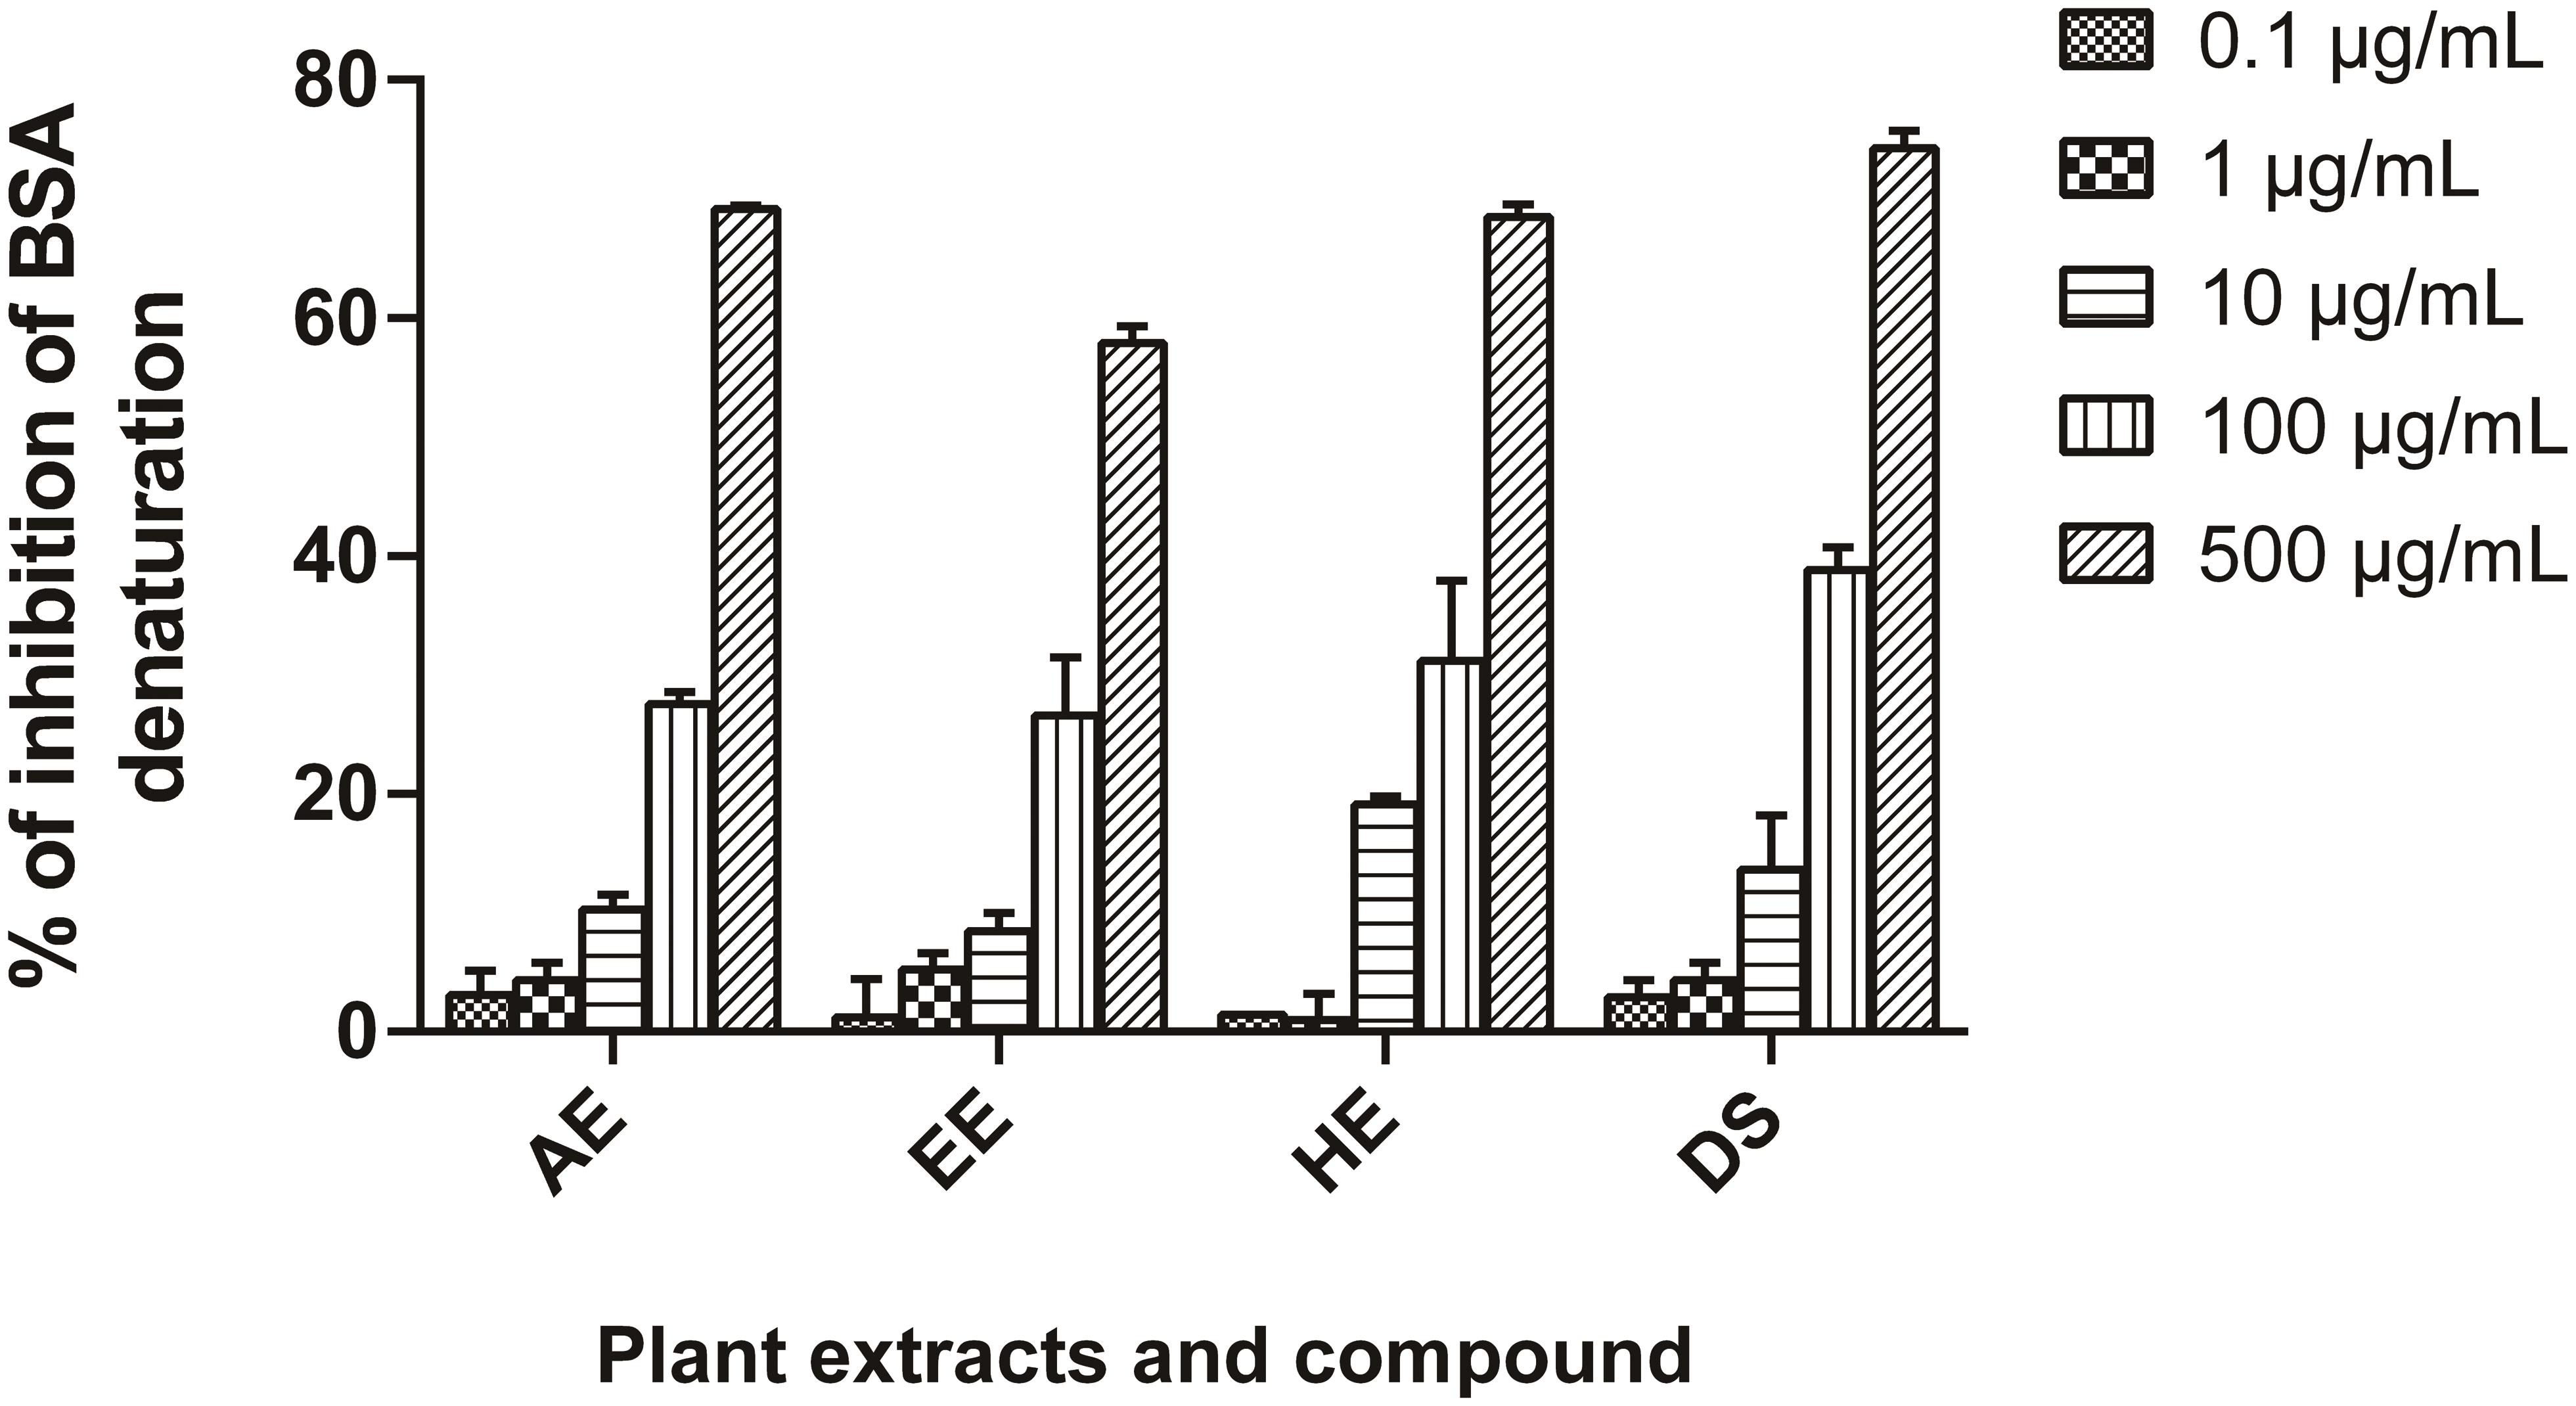 Codiaeum variegatum stem extracts inhibited BSA denaturation in a dose-dependent manner.